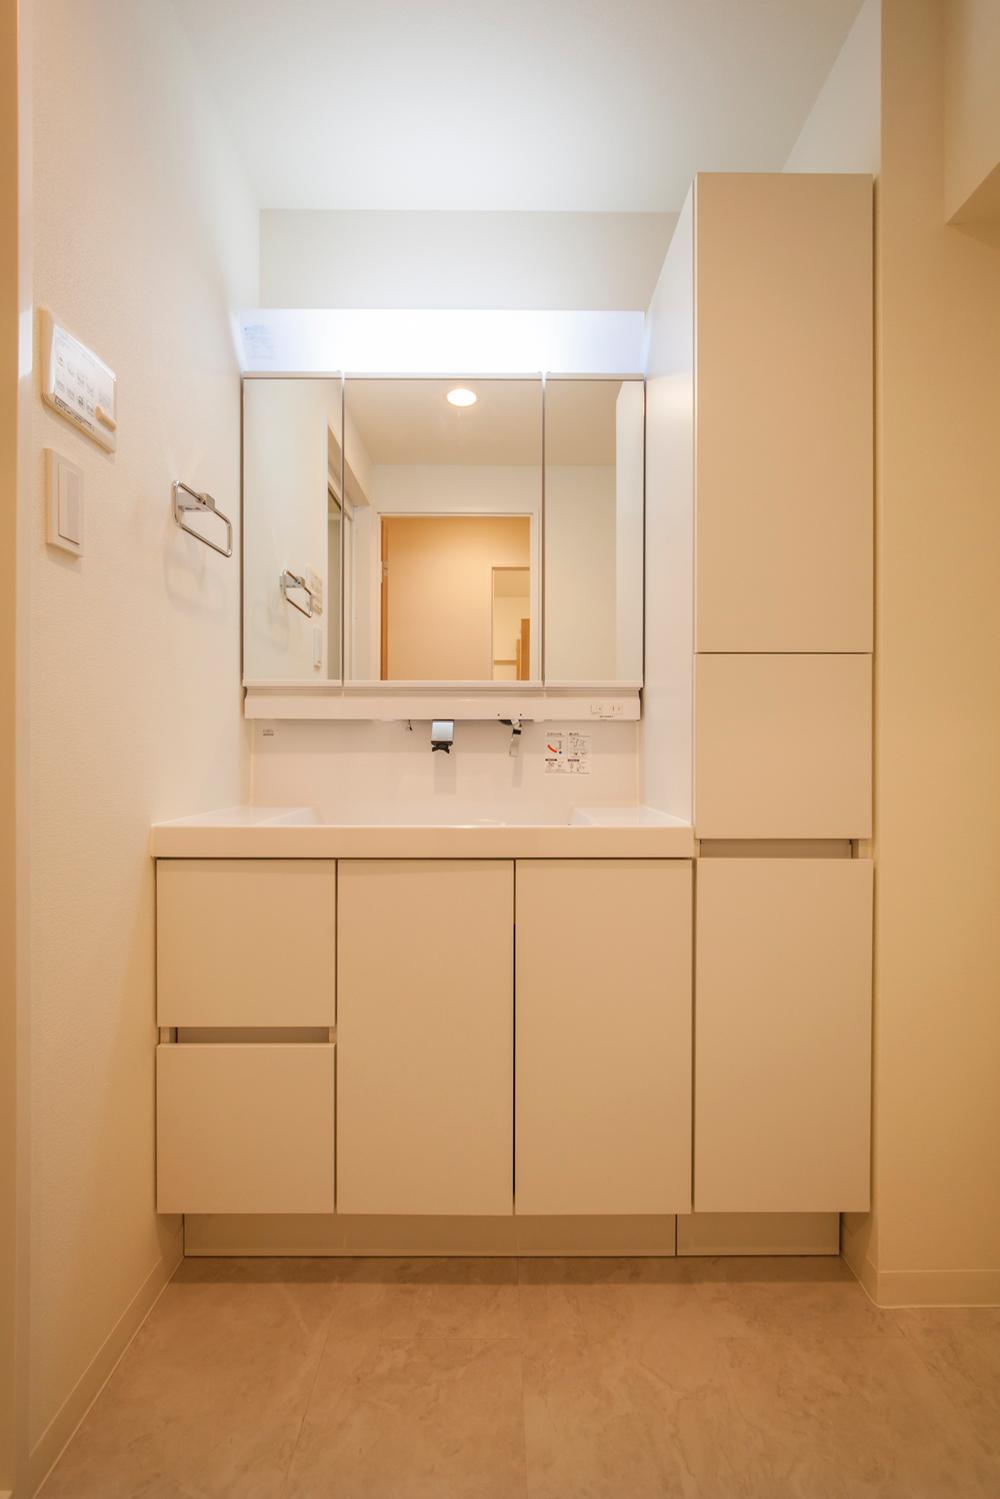 Wash basin, toilet. Vanity shower ・ With side cabinet